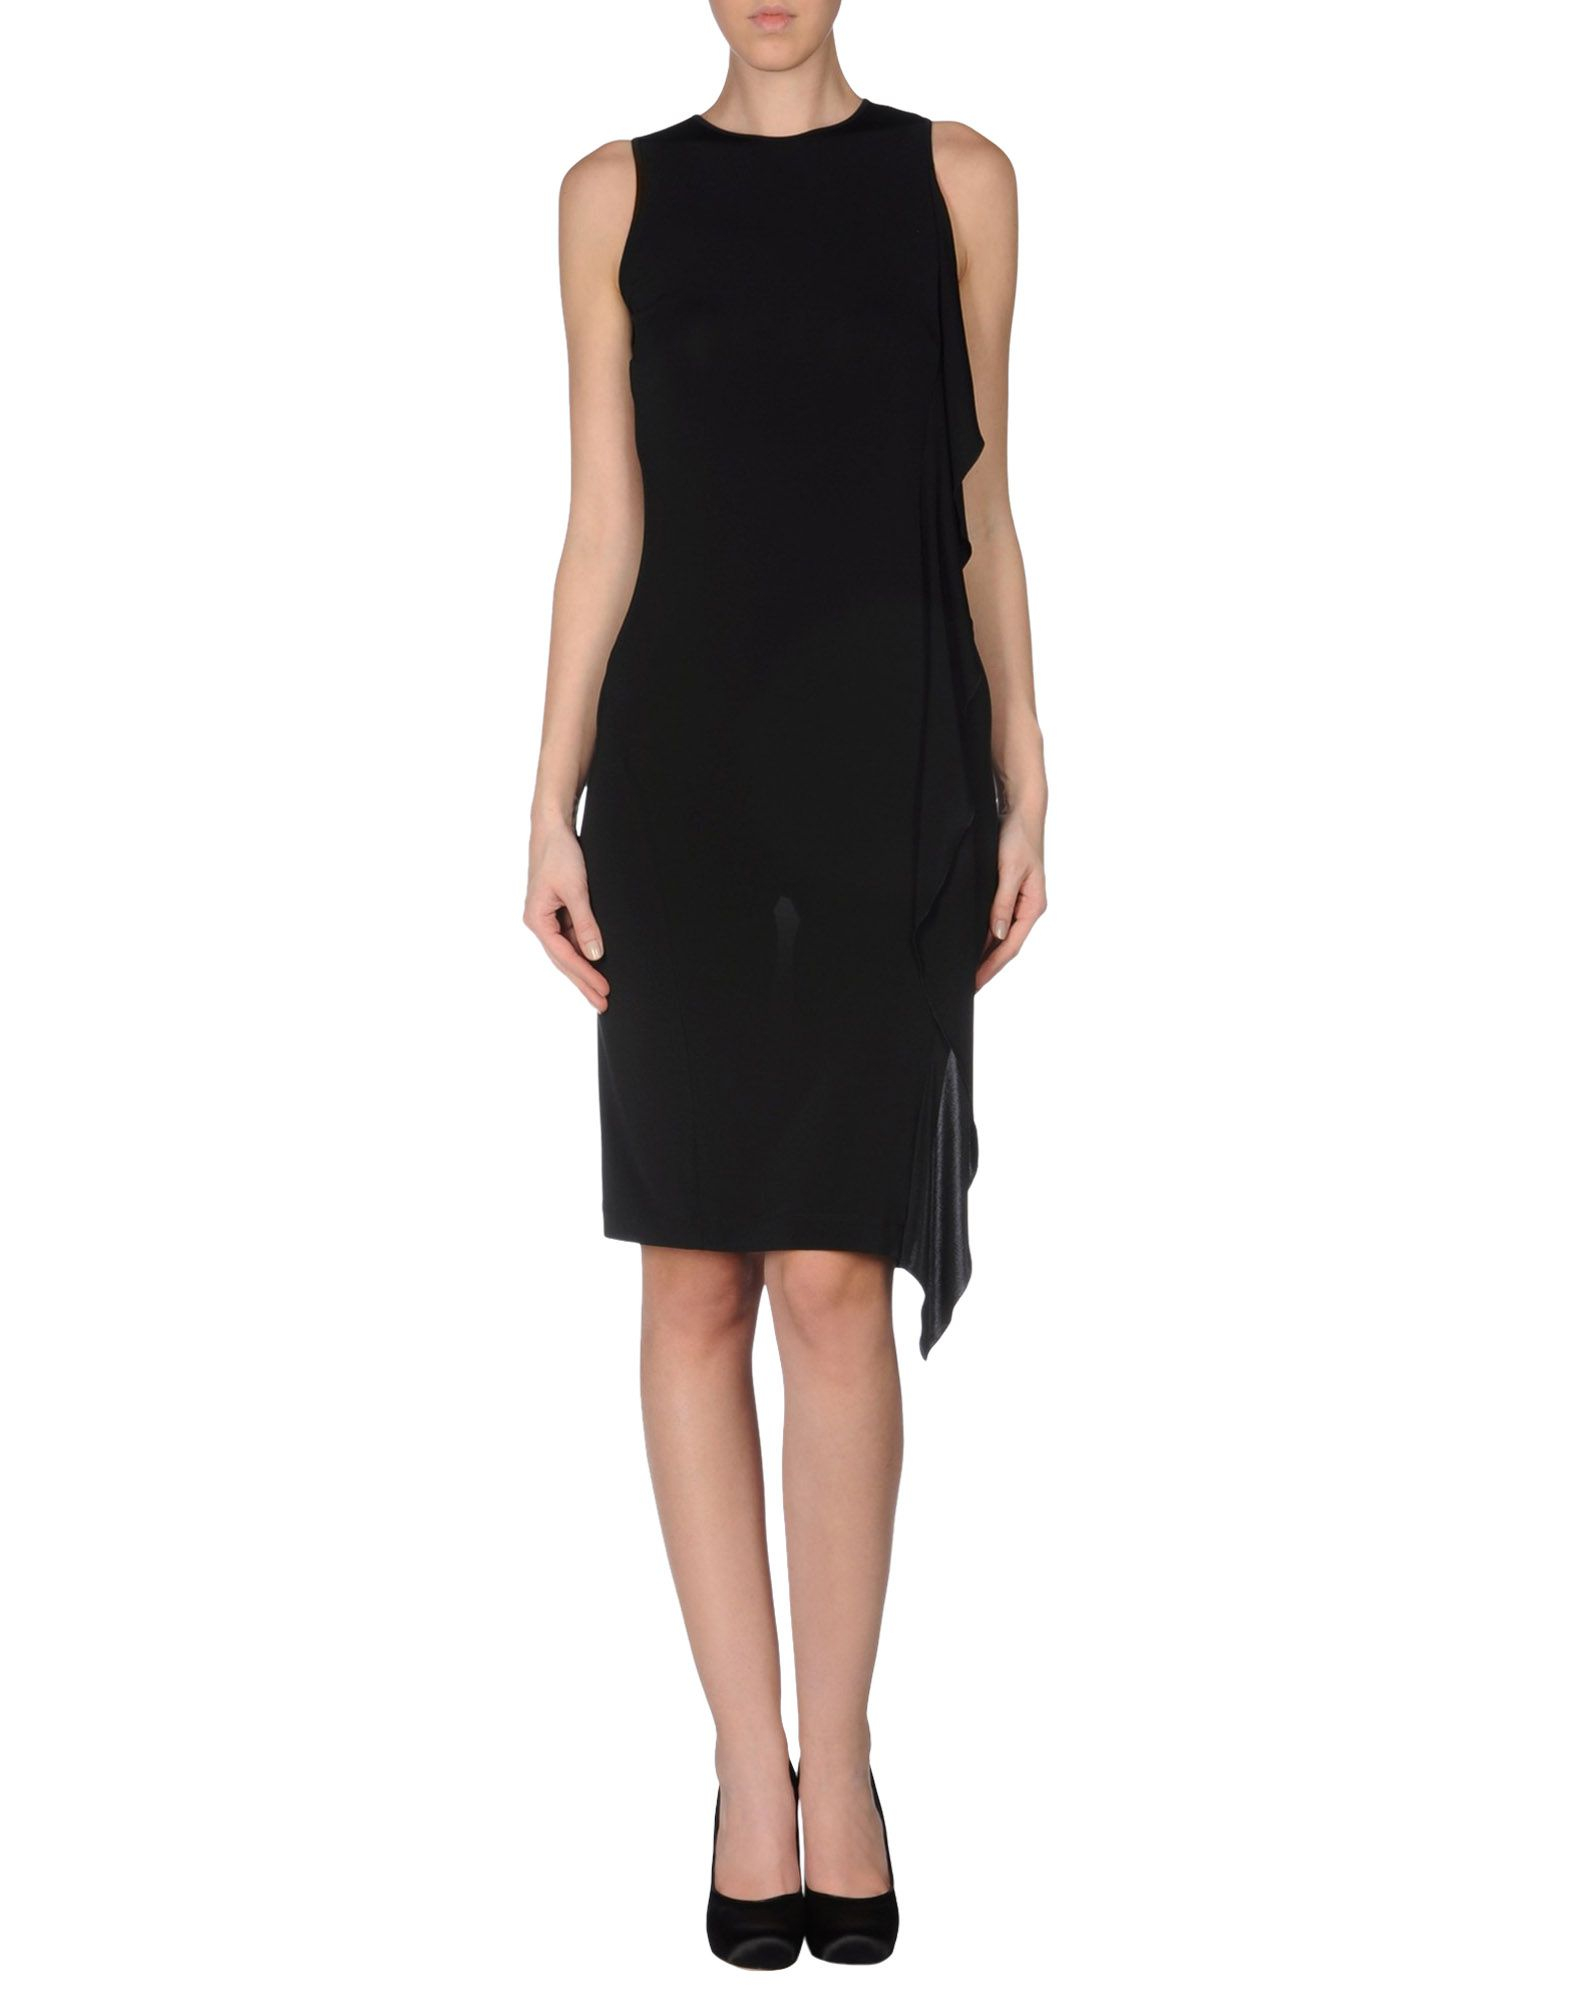 Philosophy di alberta ferretti Knee-Length Dress in Black